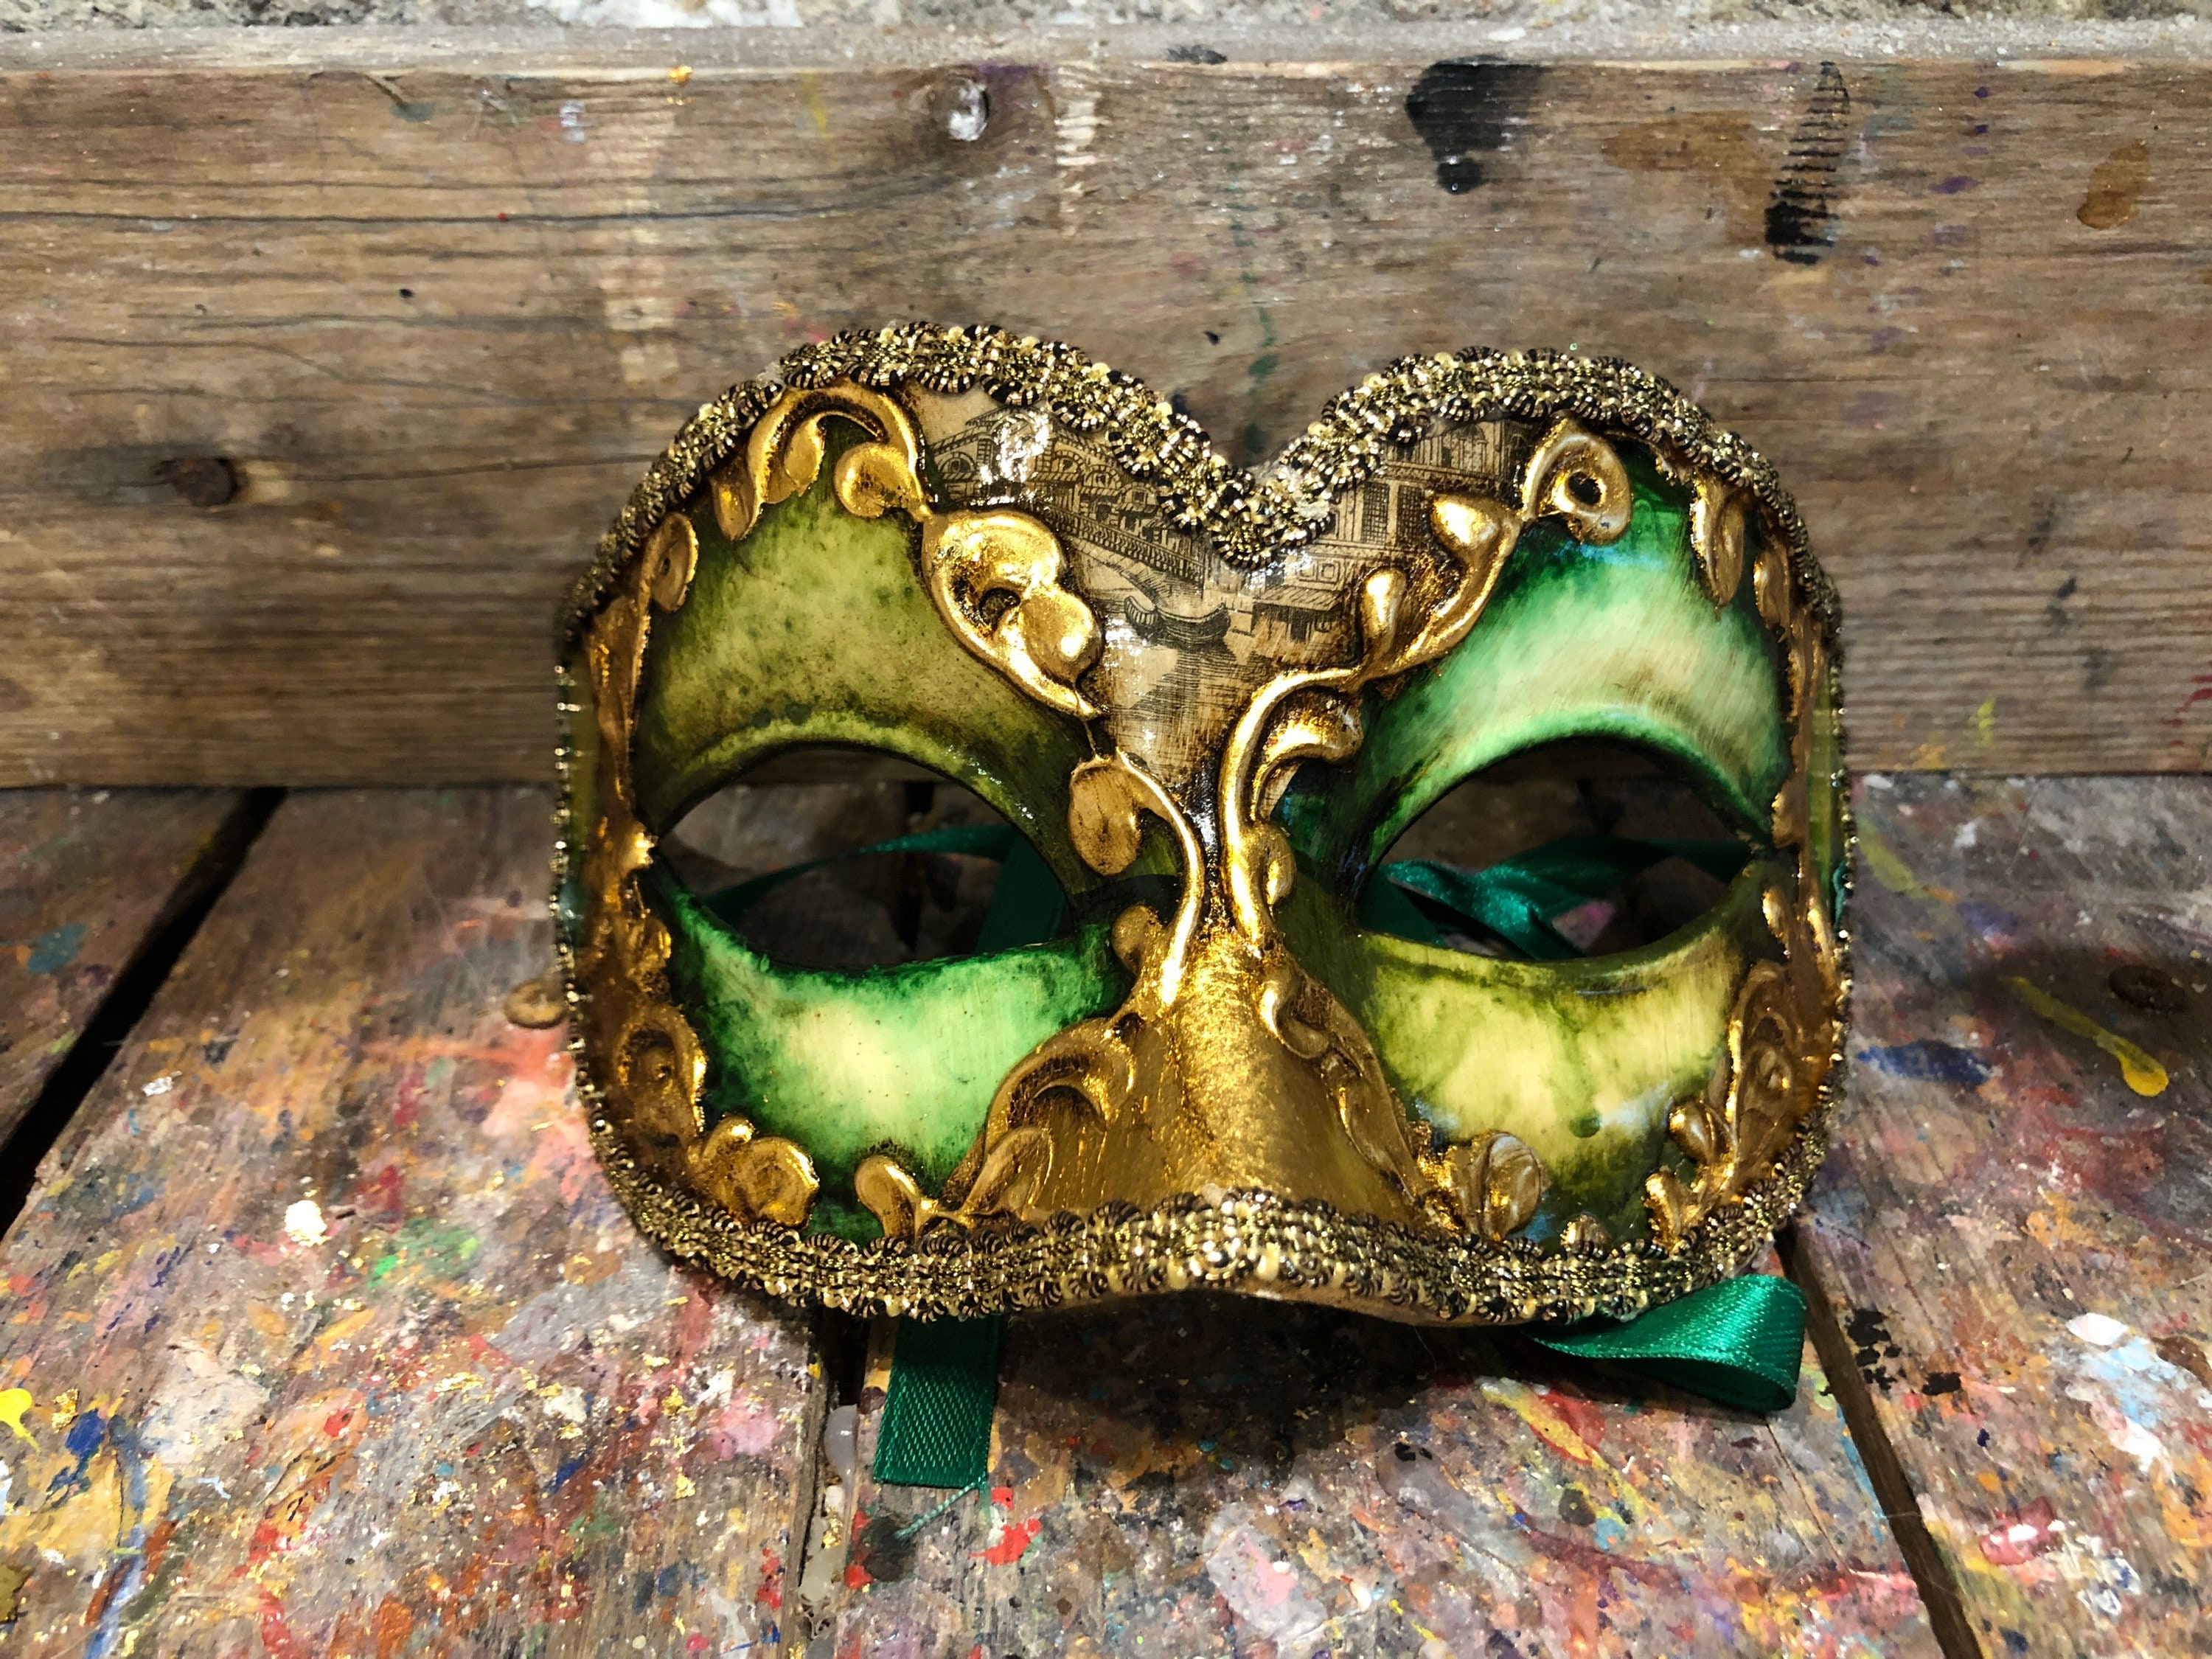 Men's Masquerade Masks Masquerade Ball Party Mask Cosplay Mask